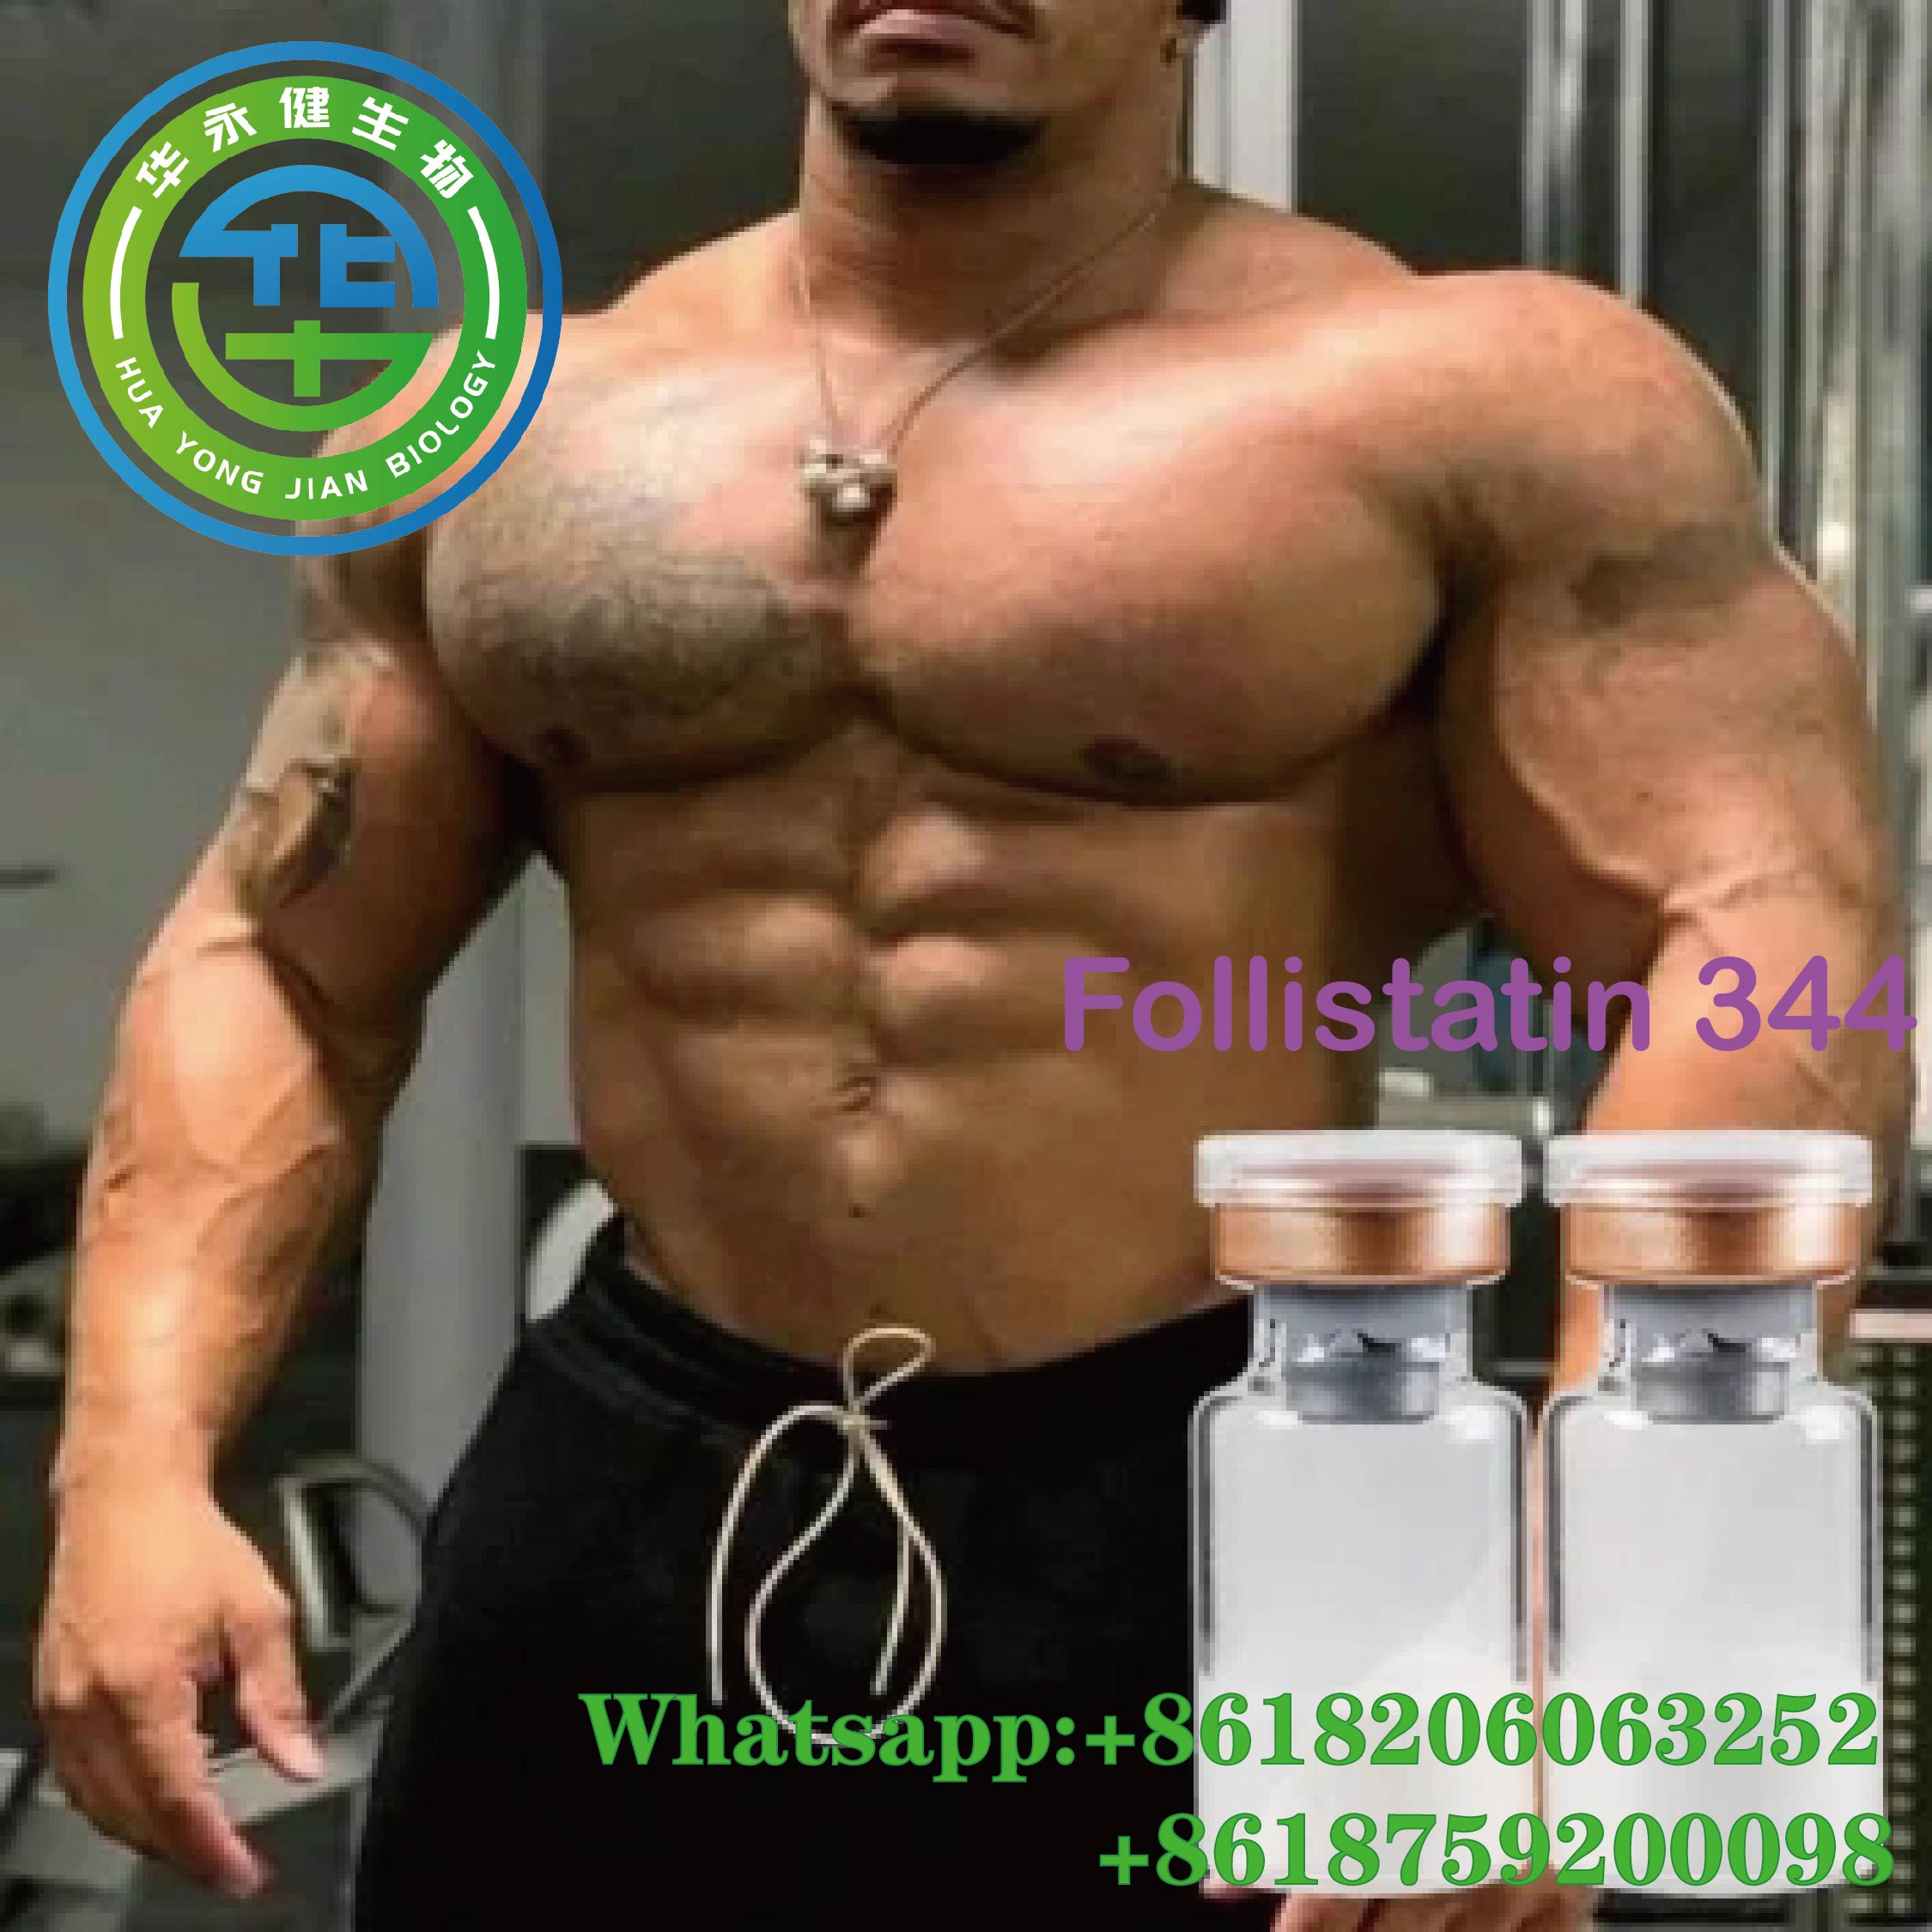 Follistatin 344 human growth peptides For Bodybuildier Fat Burning